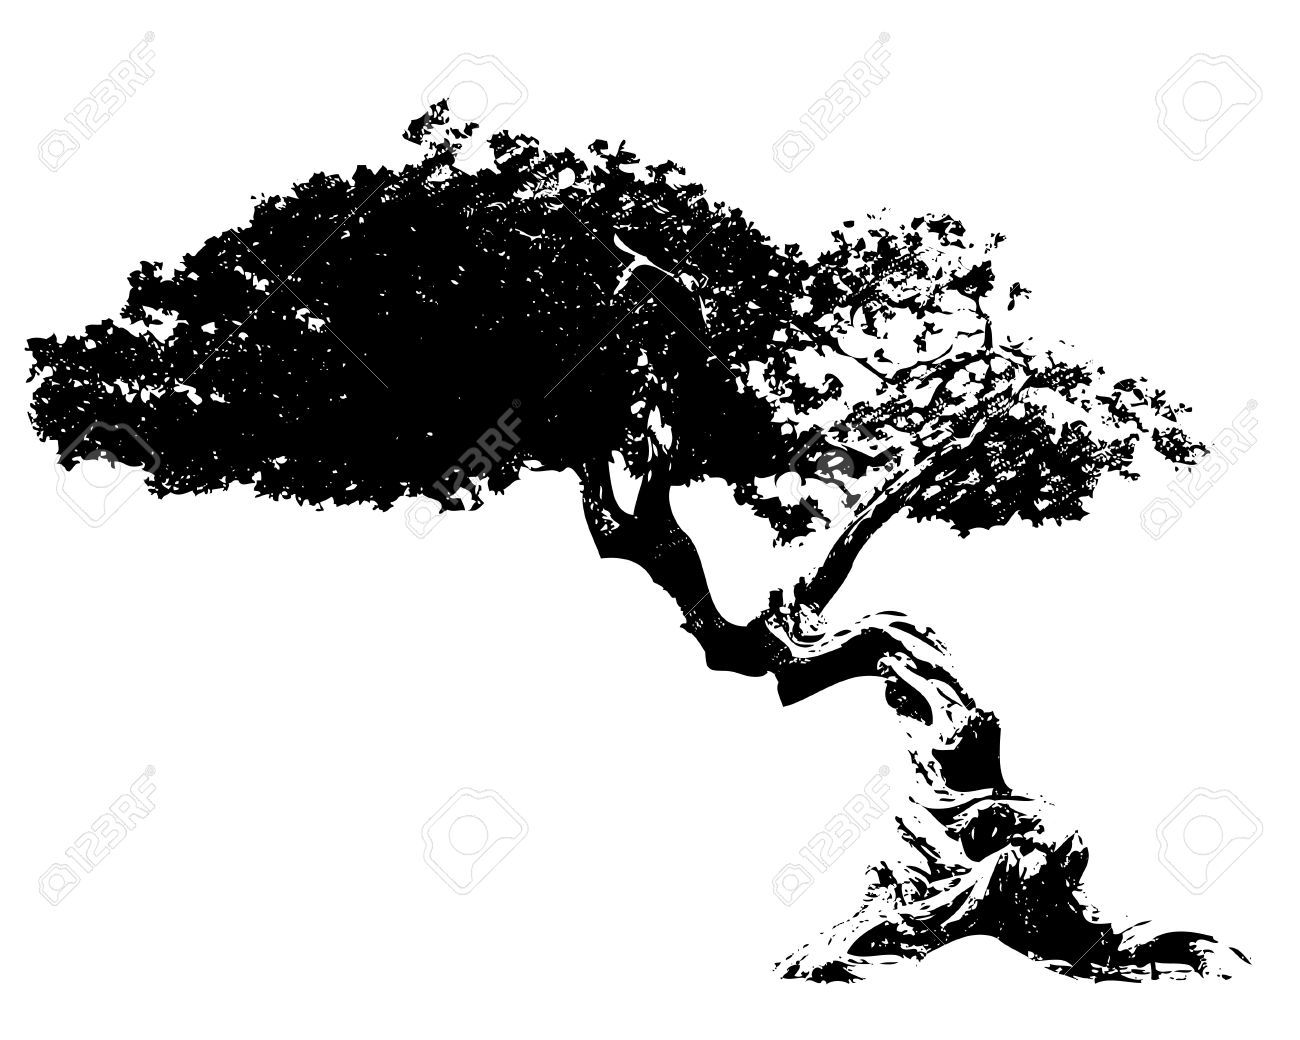 acacia tree : Illustration